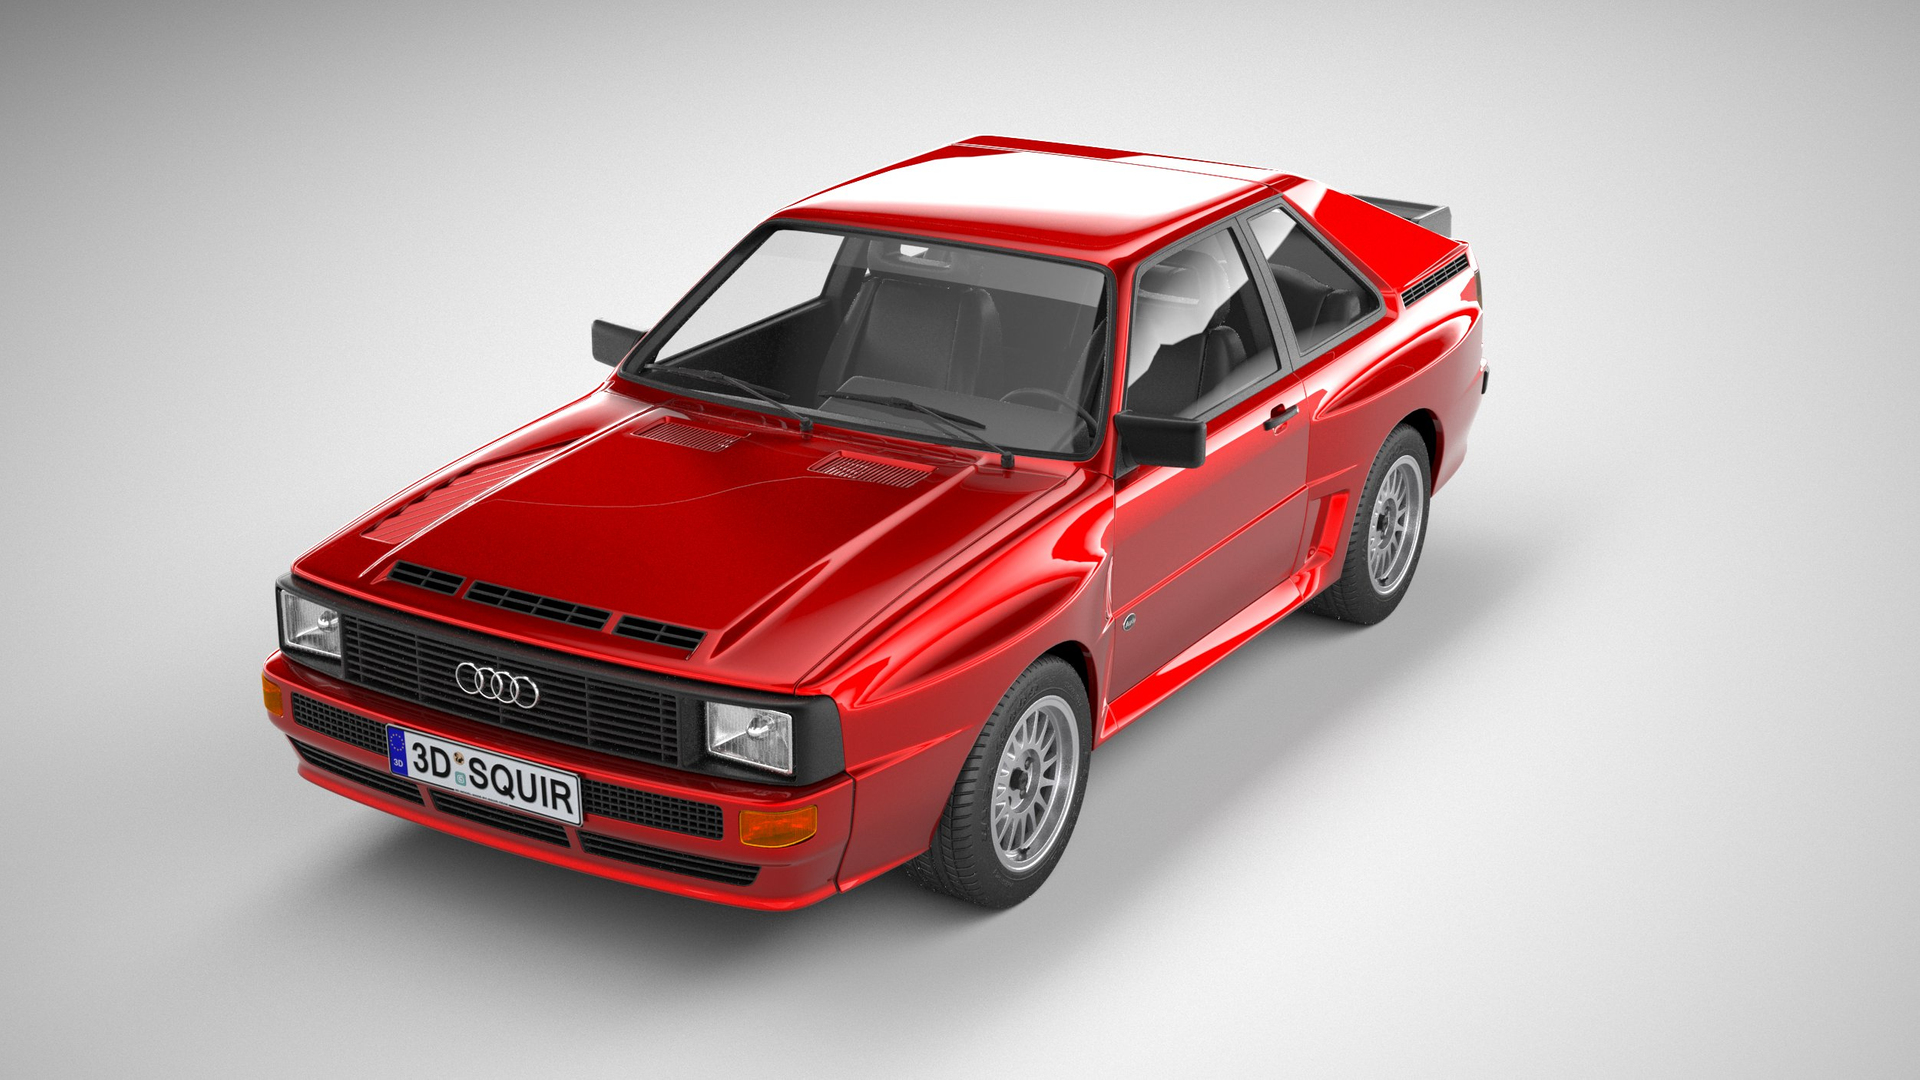 Audi Sport Quattro 1985 3D model https://p.turbosquid.com/ts-thumb/O9/o5tfhe/us/audi_sport_quattro_1985/jpg/1642408407/1920x1080/turn_fit_q99/d6c2677f6f38a4600747a68a139b30227e20cbbd/audi_sport_quattro_1985-1.jpg